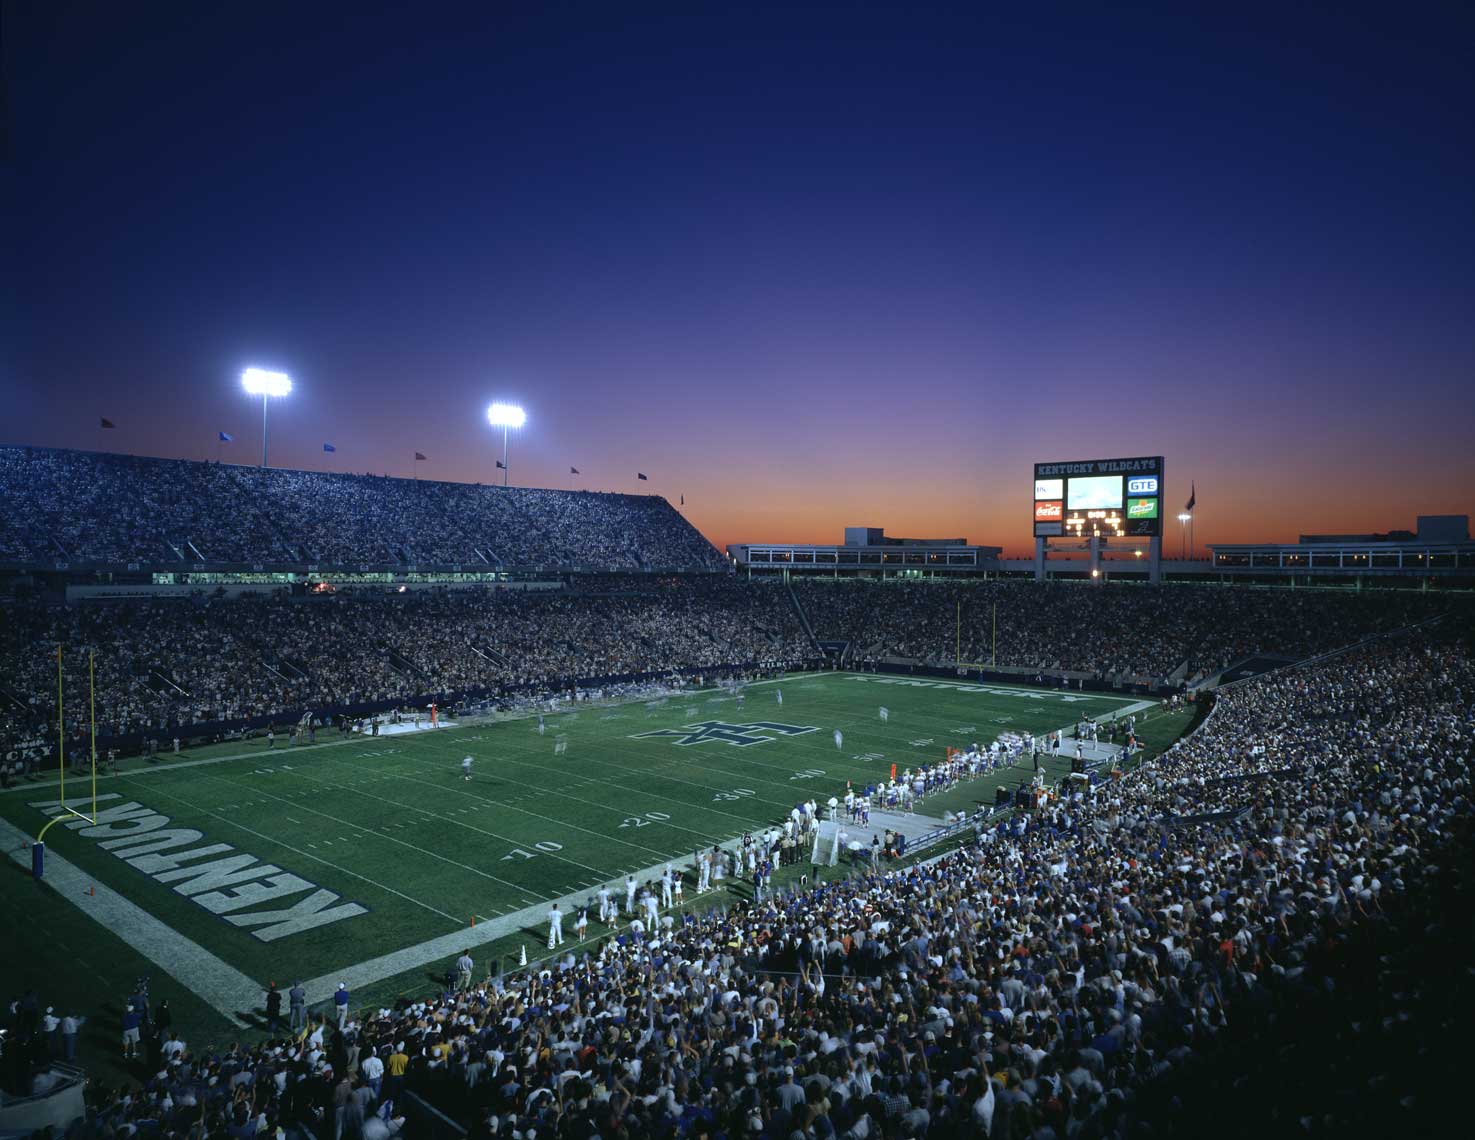 Nighttime view of the University of Kentucky Commonwealth Stadium